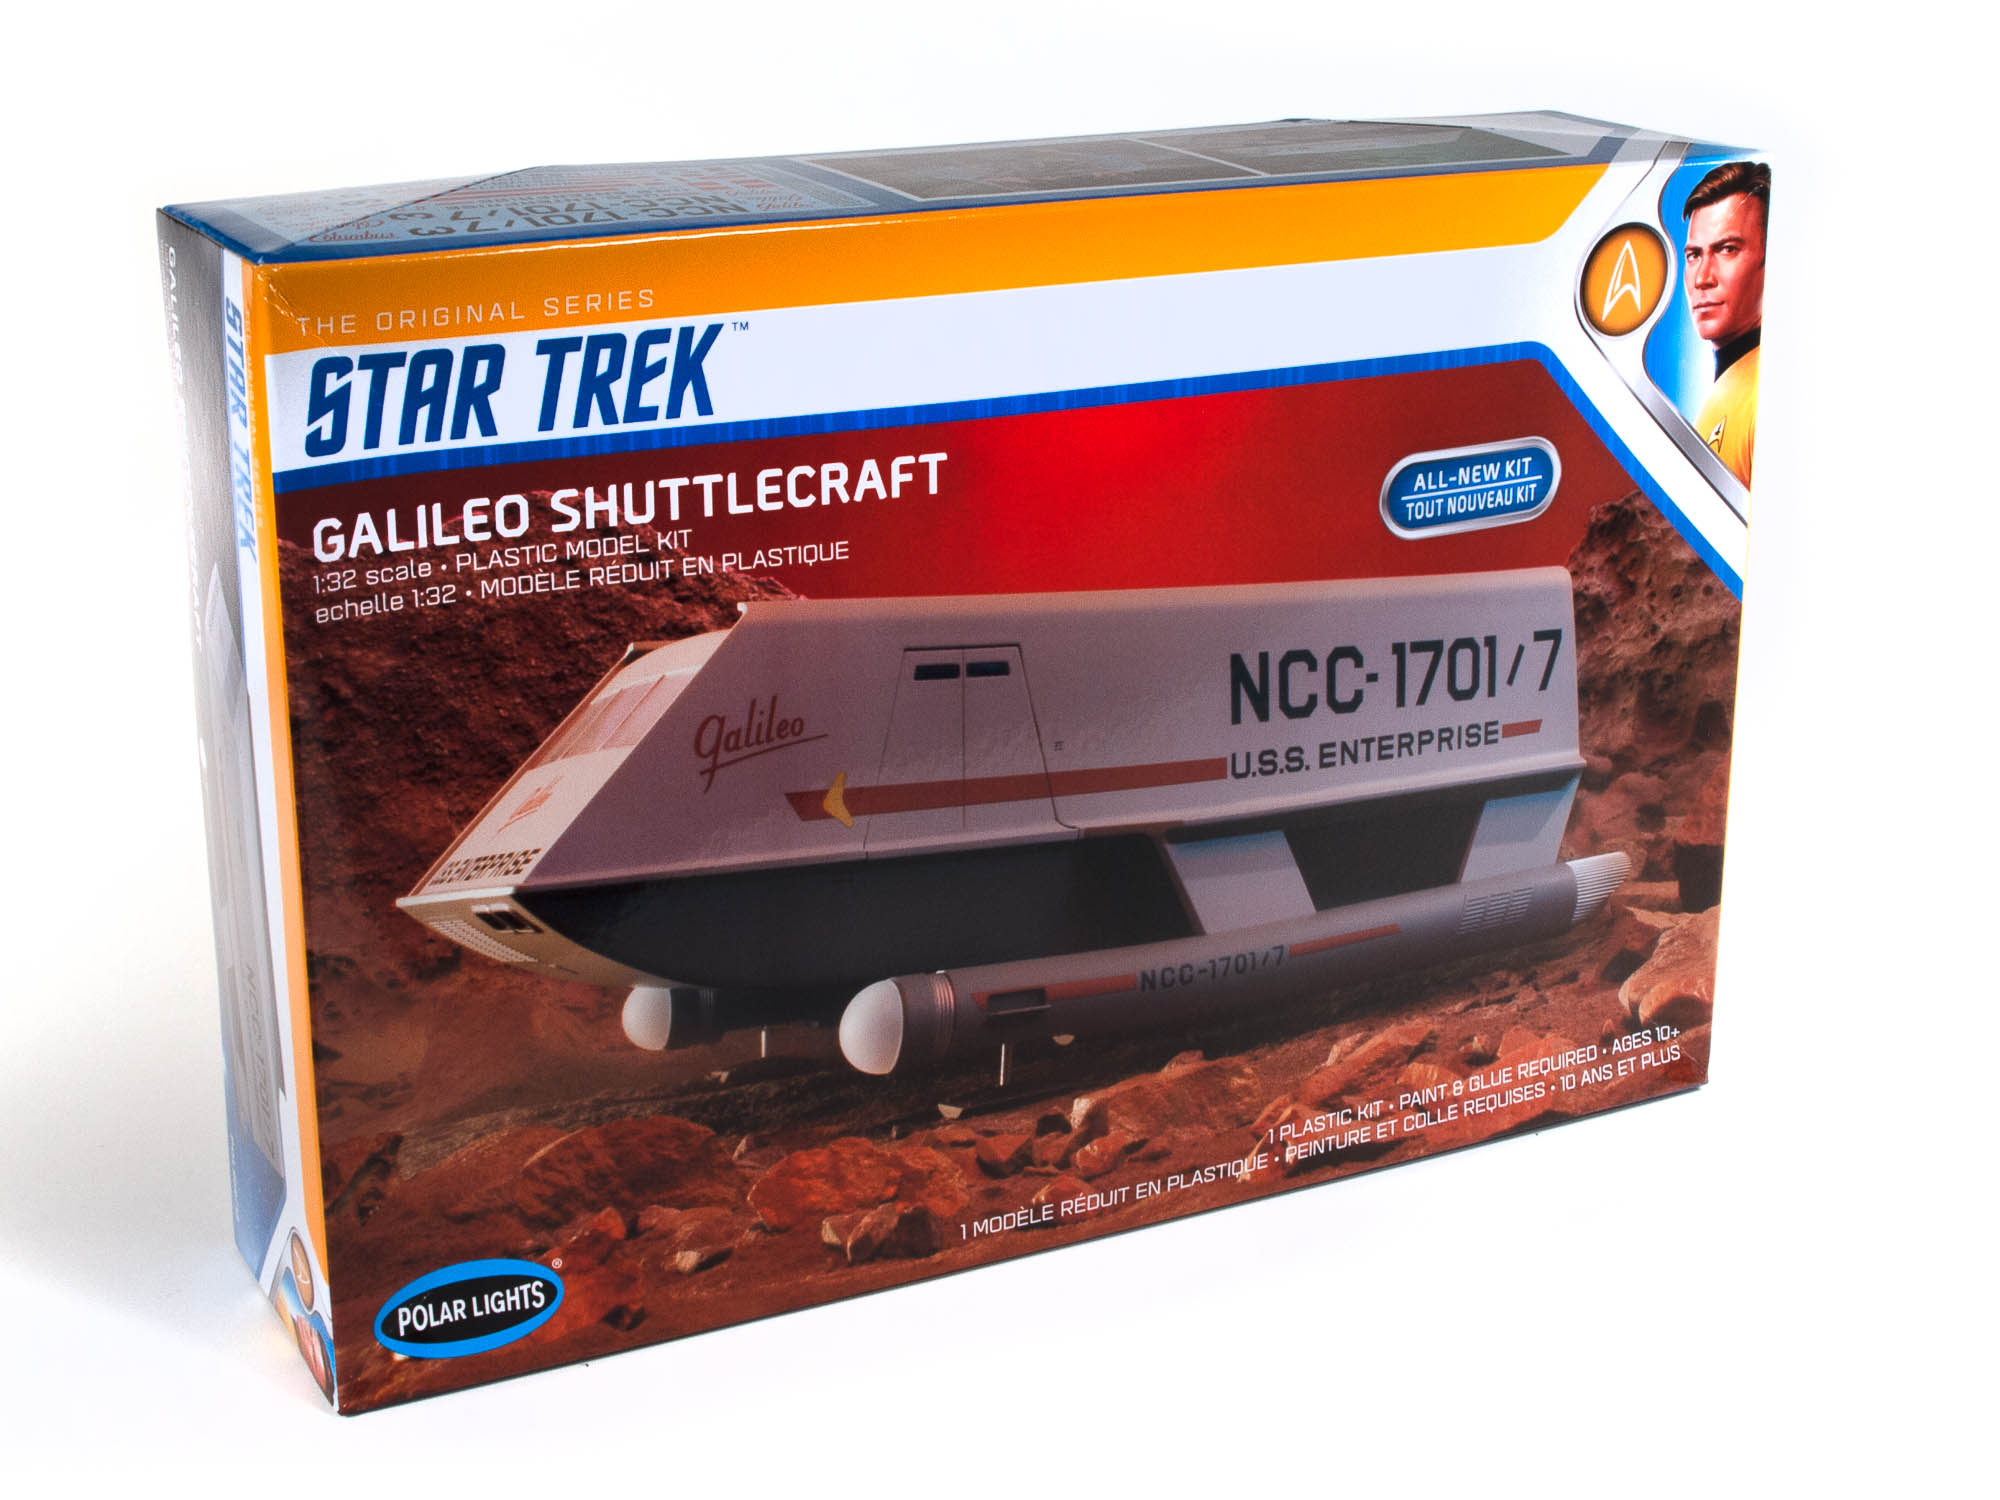 Star Trek Galileo Shuttle 1:32